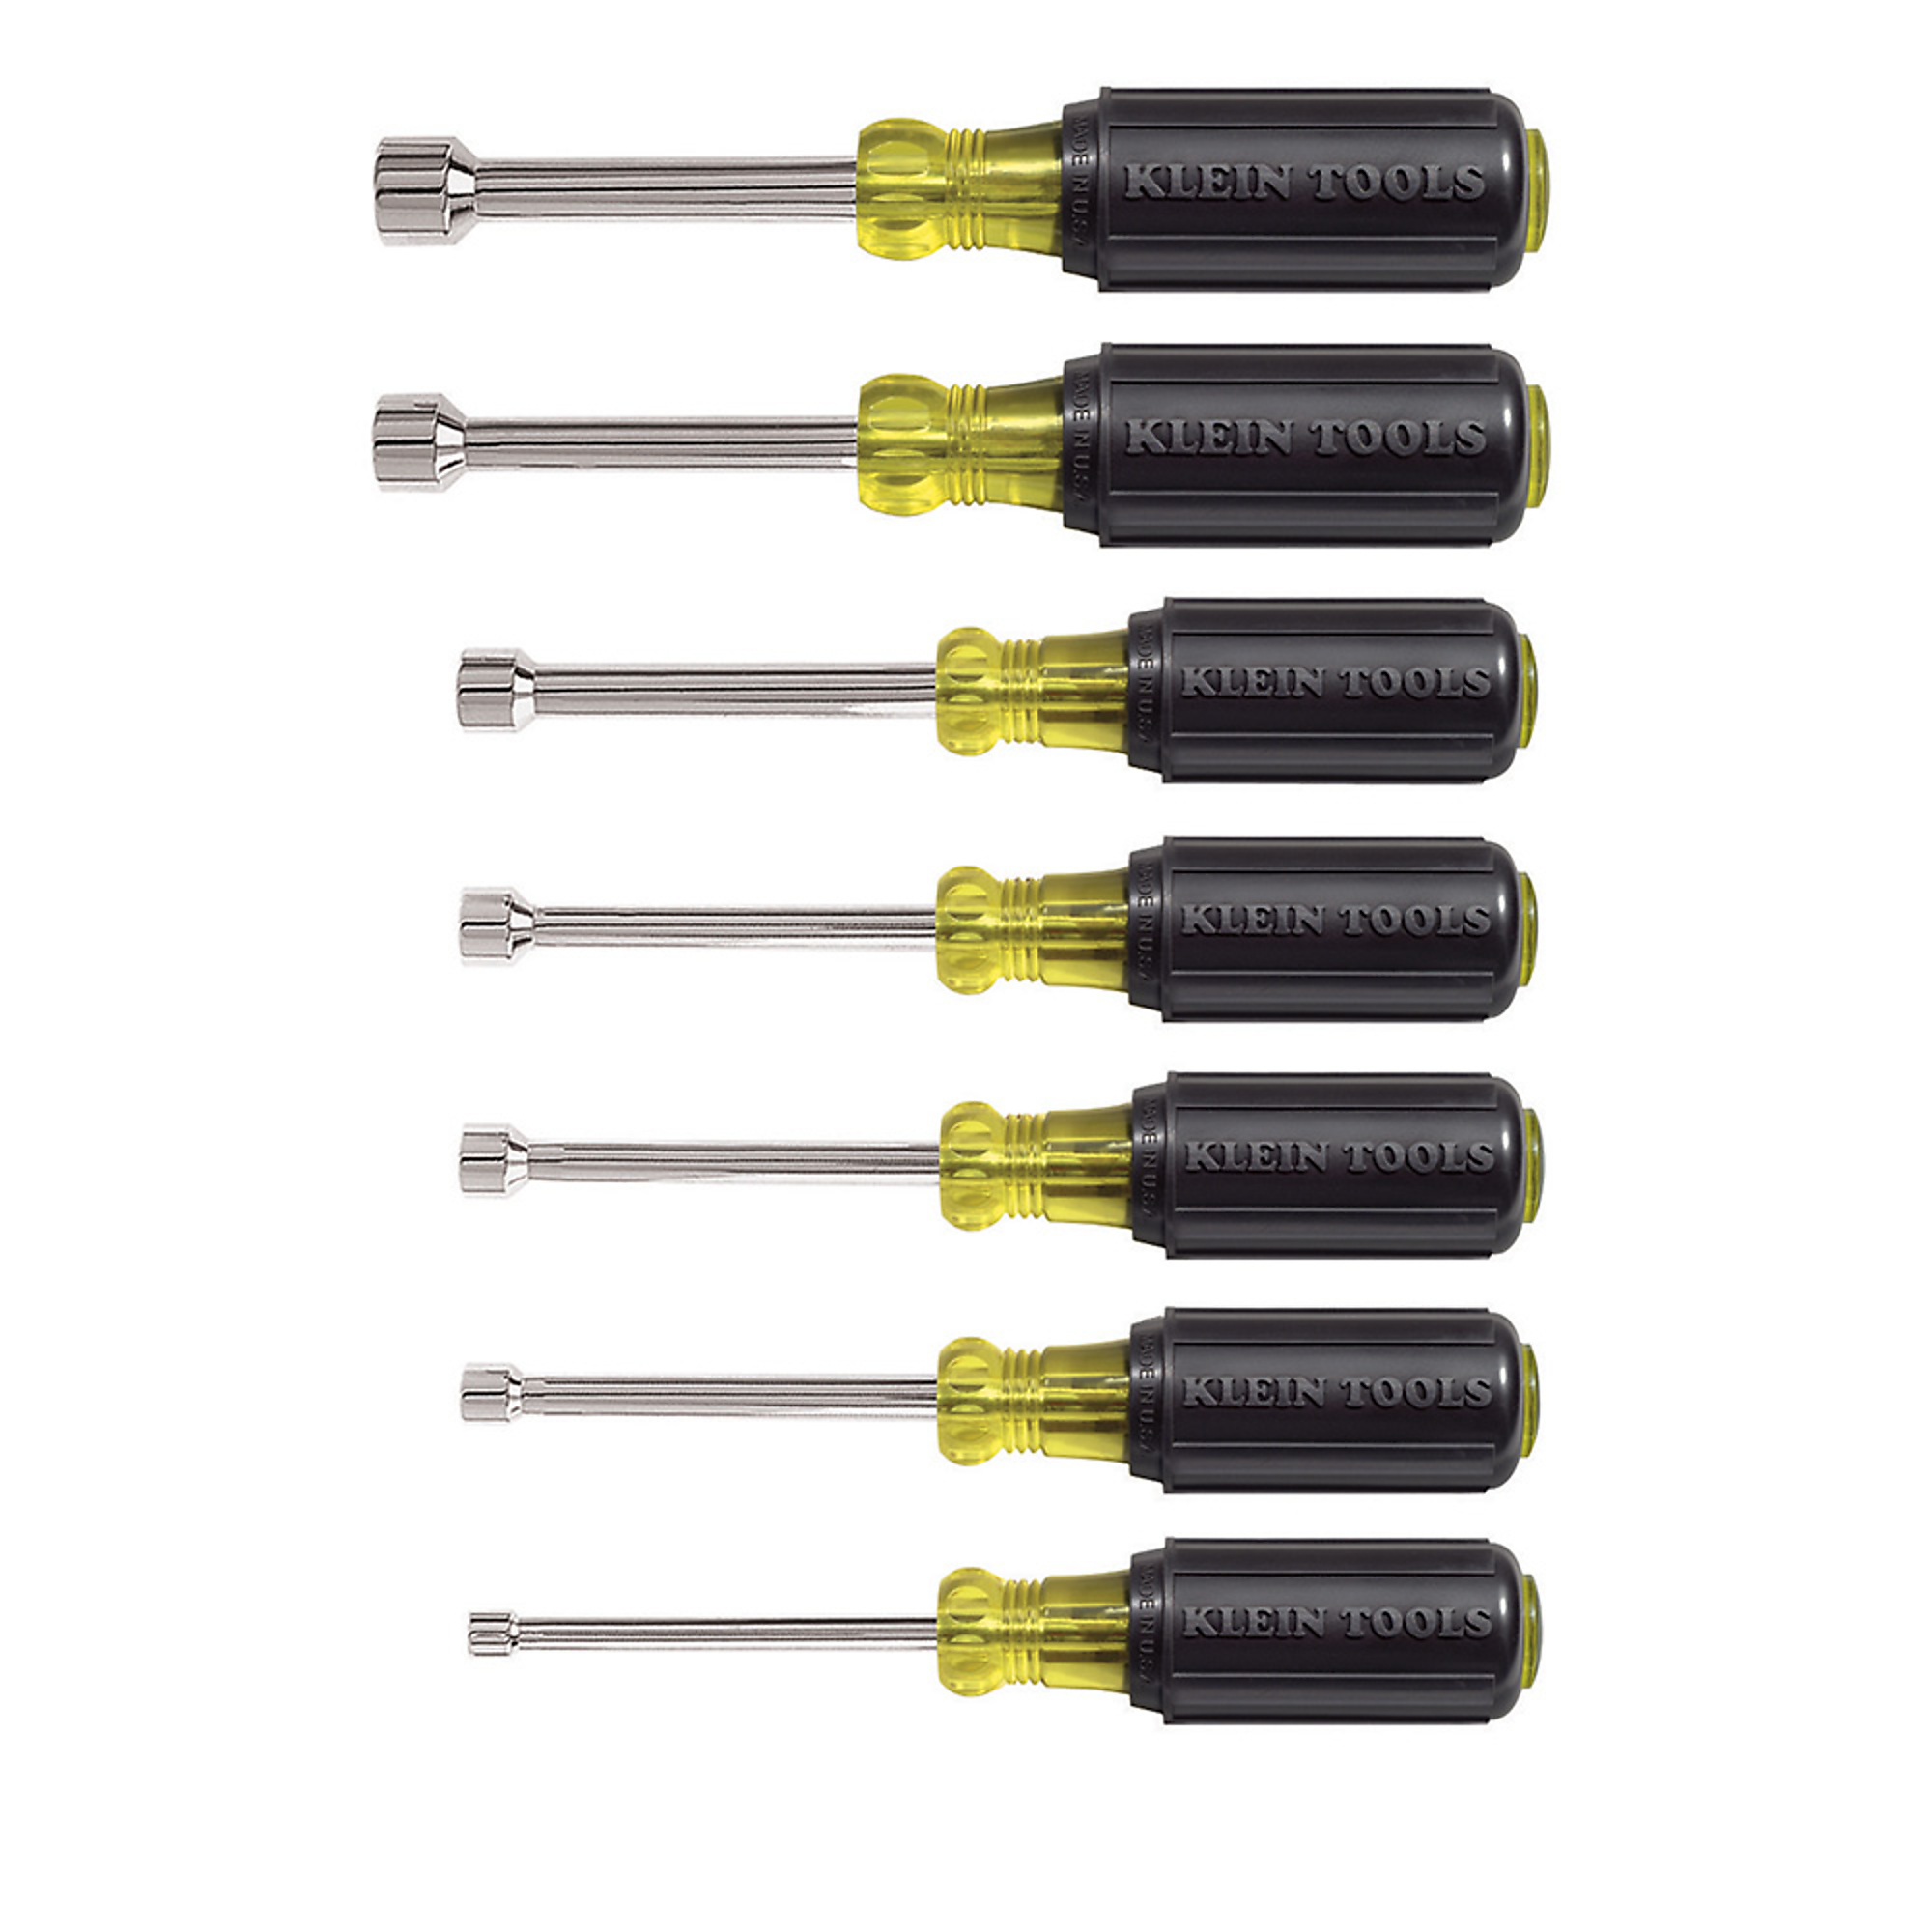 Klein Tools, Nut Driver Set, 3Inch Shafts, Cushion-Grip, 7-Pc, Model 631